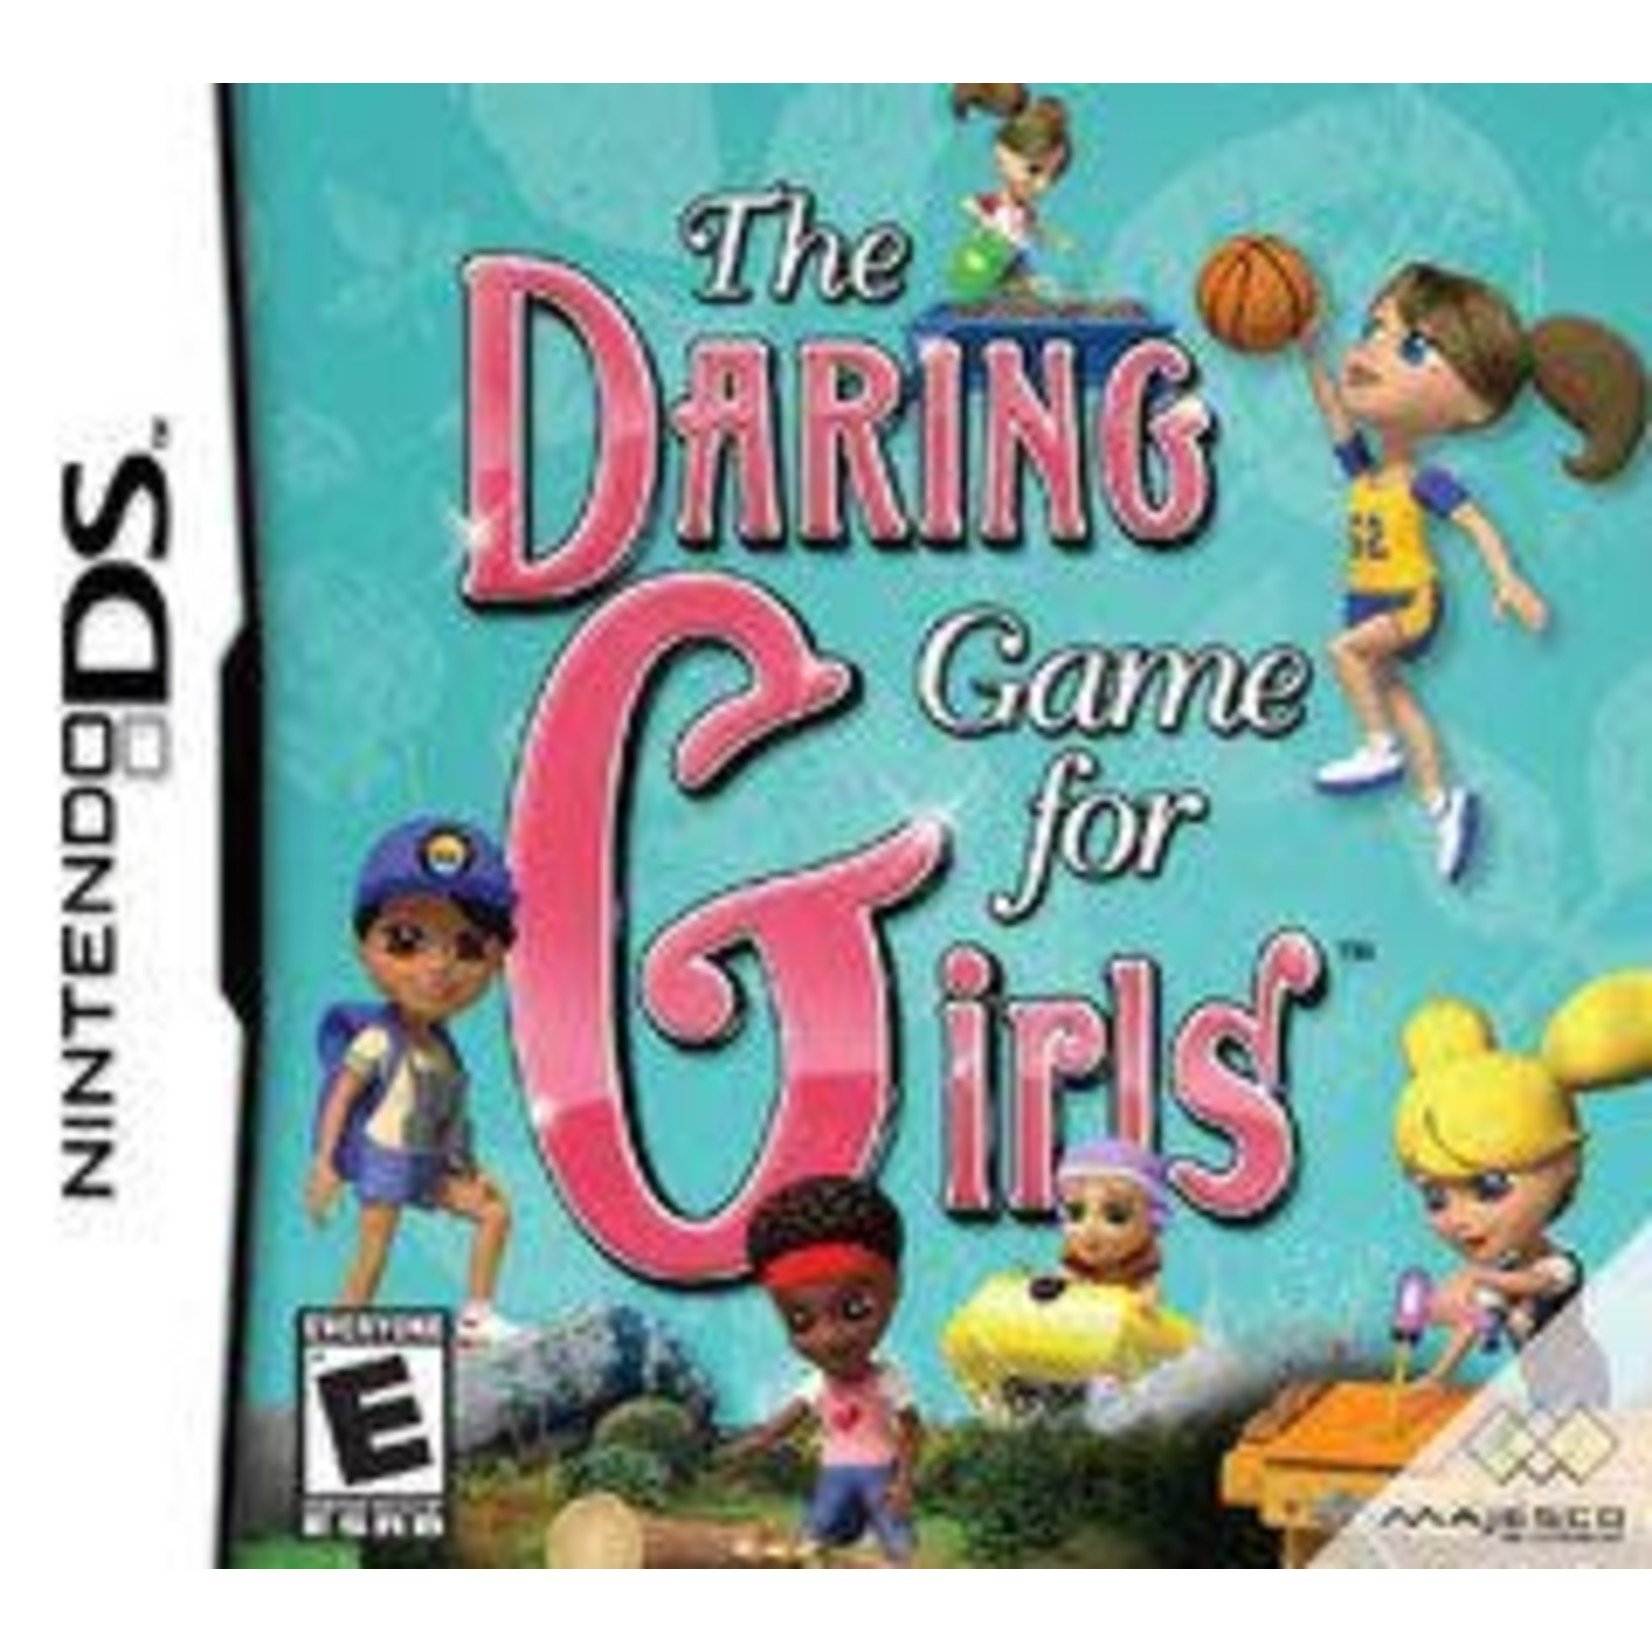 nintendo ds games for girls